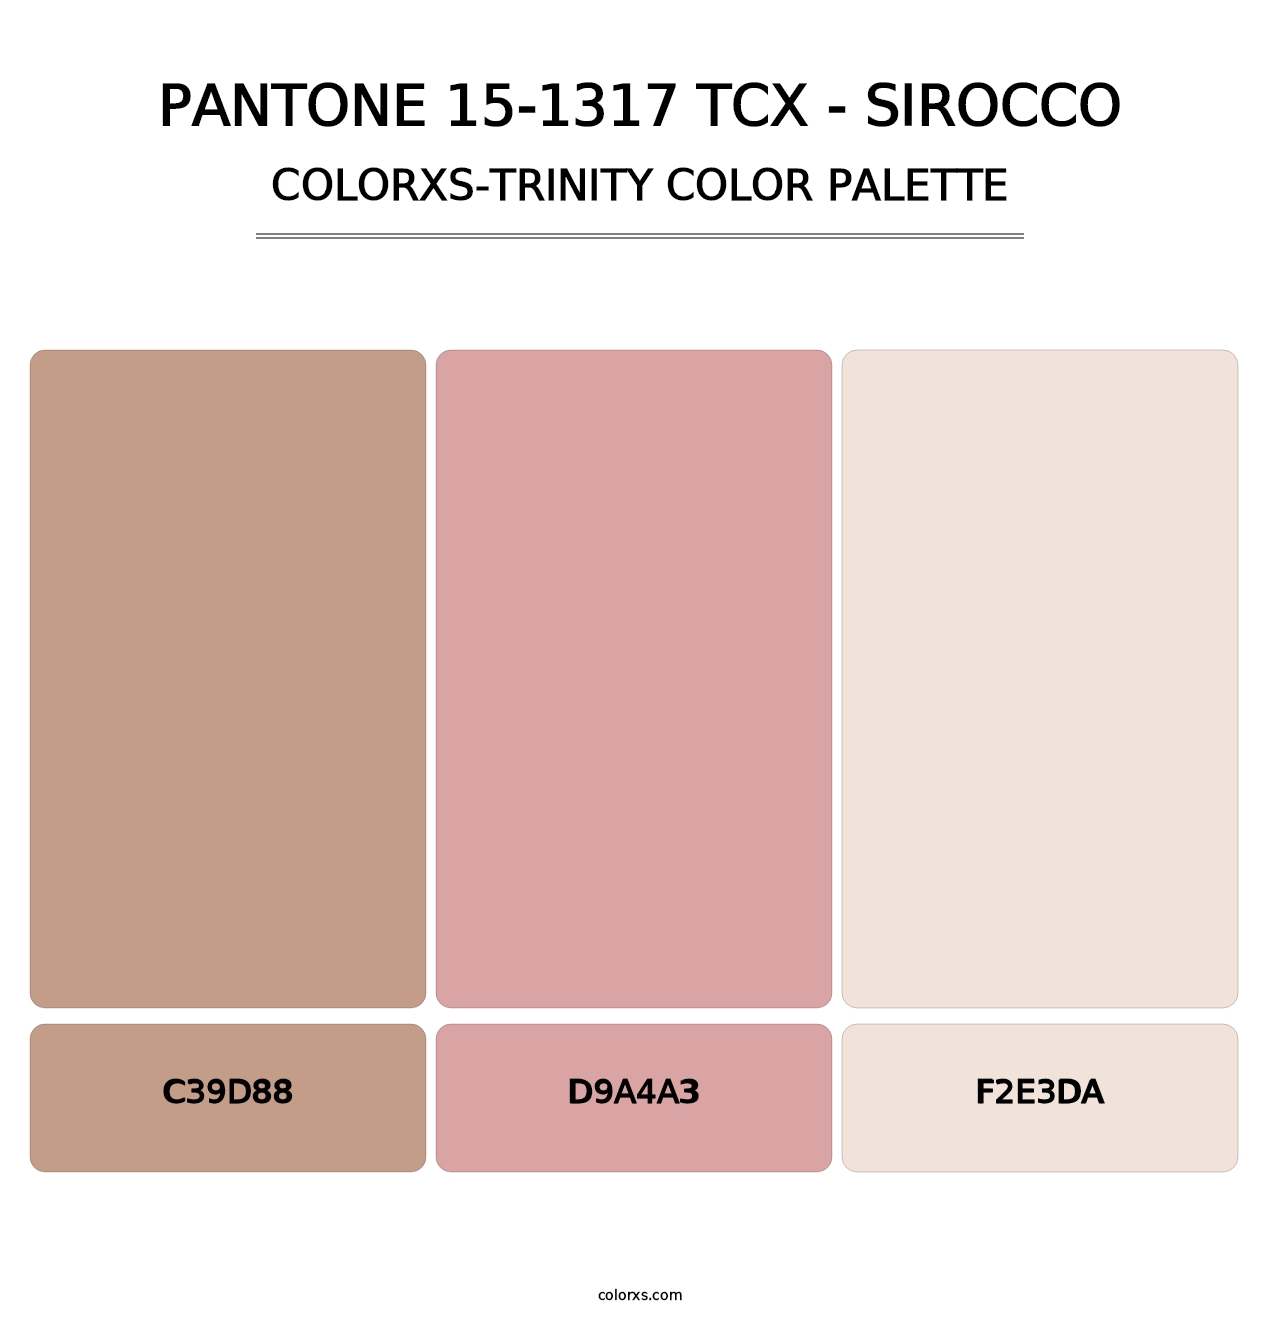 PANTONE 15-1317 TCX - Sirocco - Colorxs Trinity Palette